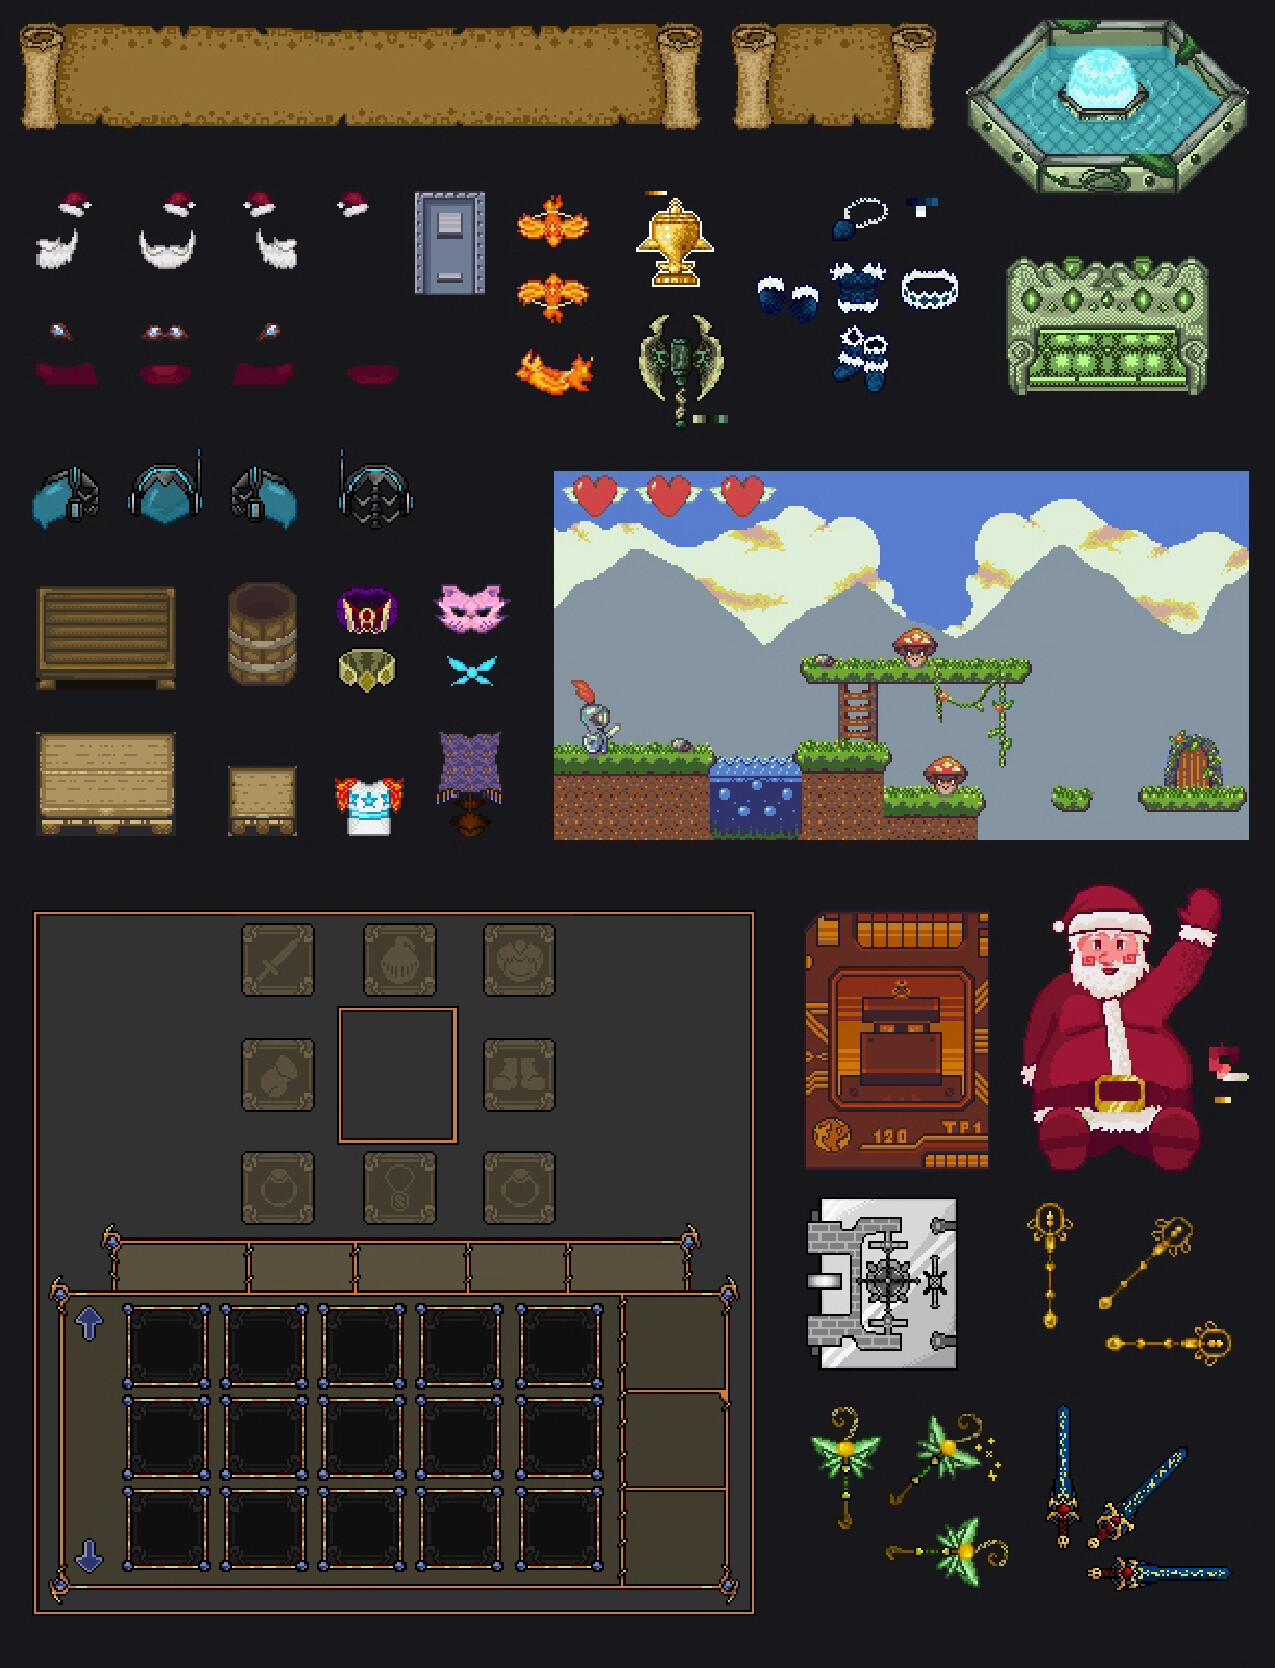 Pixelart Game Kit by Mobile Game Graphics